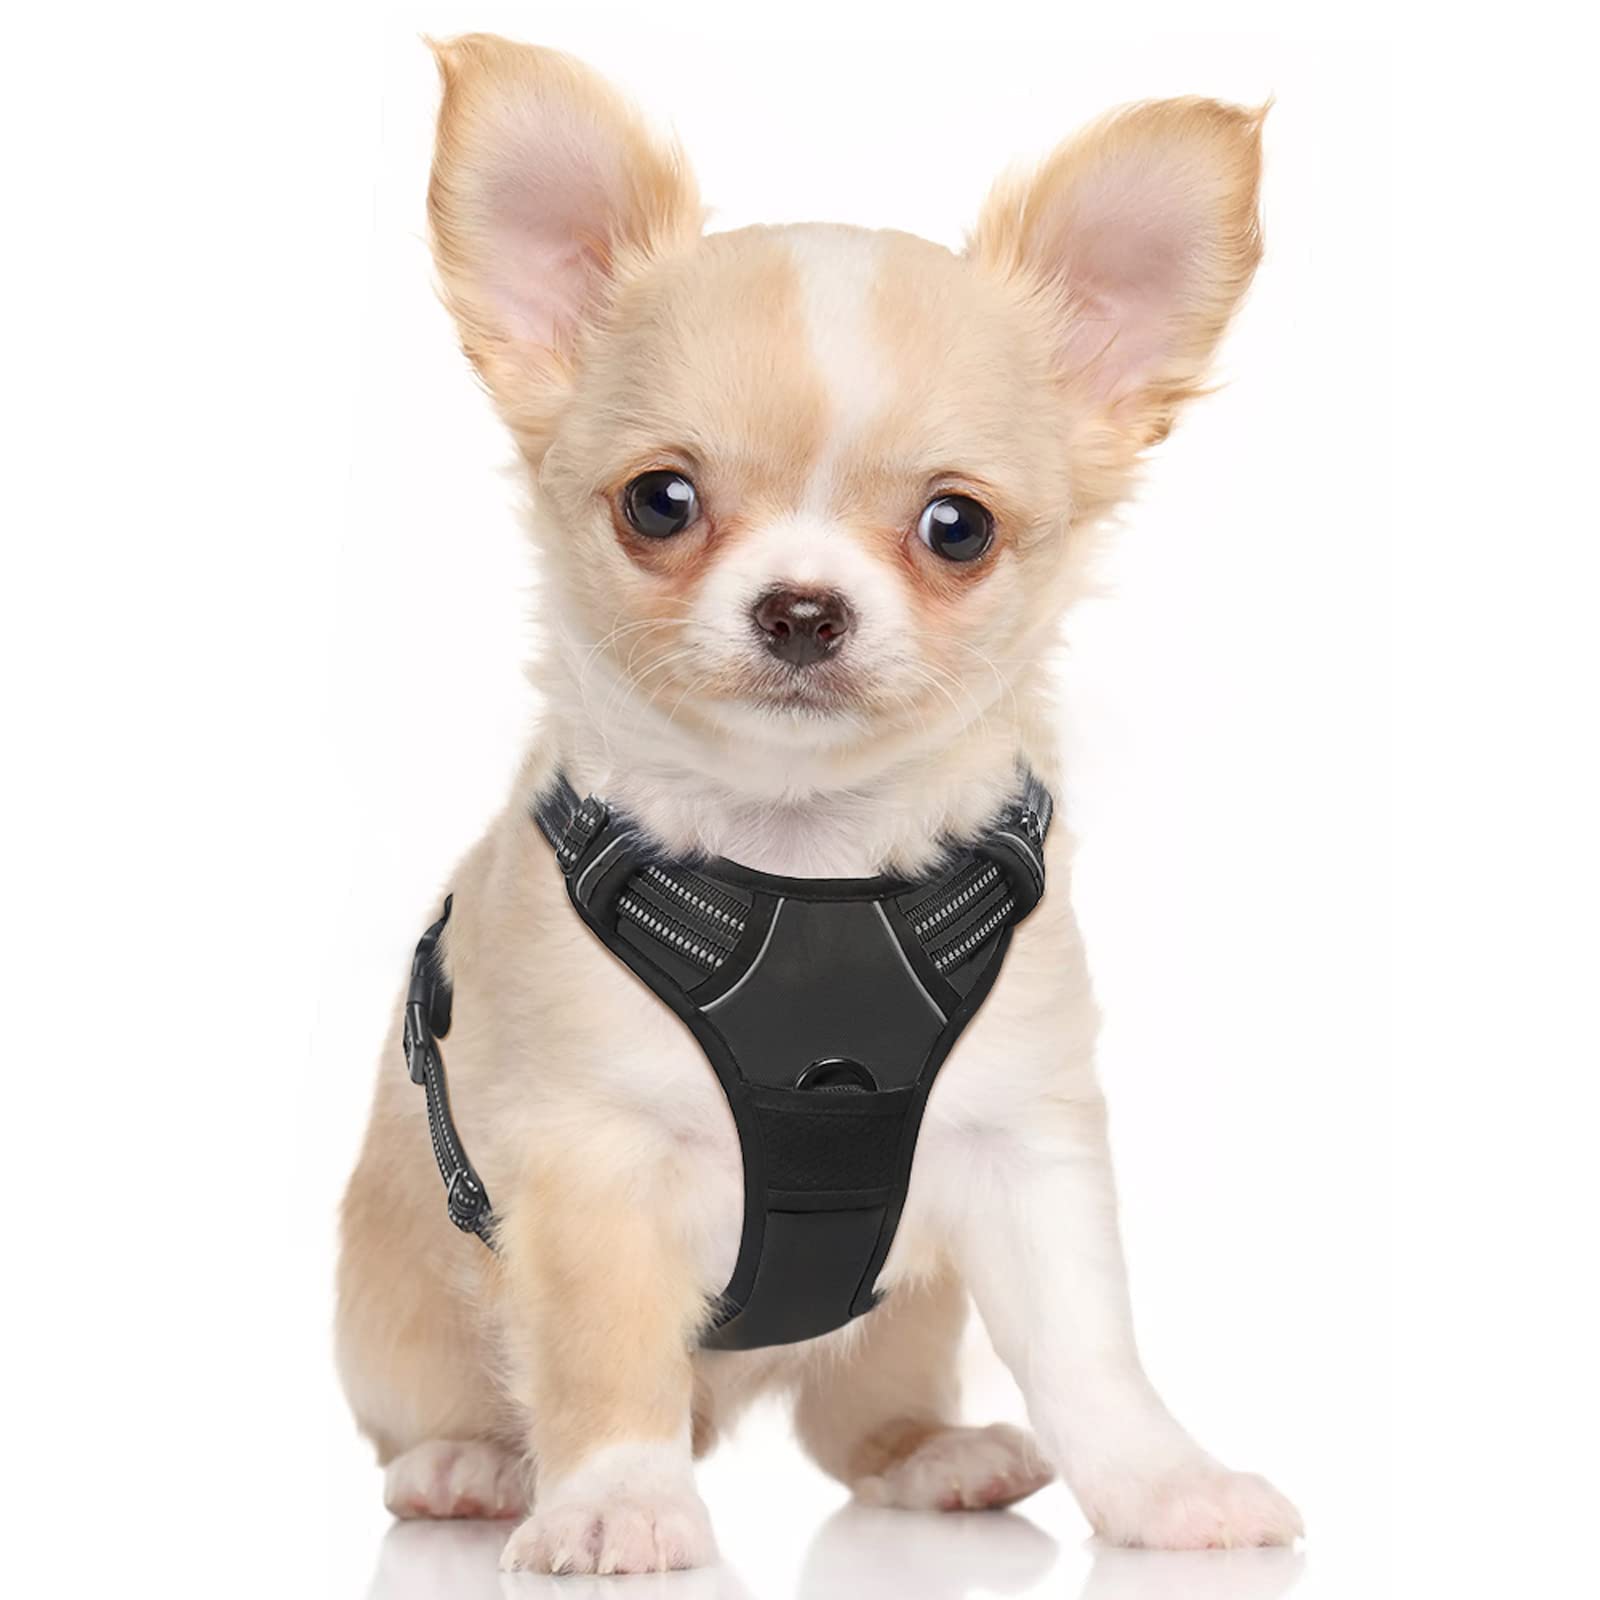 rabbitgoo Dog Harness, No-Pull Pet Harness with 2 Leash clips, Adjustable Soft Padded Dog Vest, Reflective No-choke Pet Oxford V